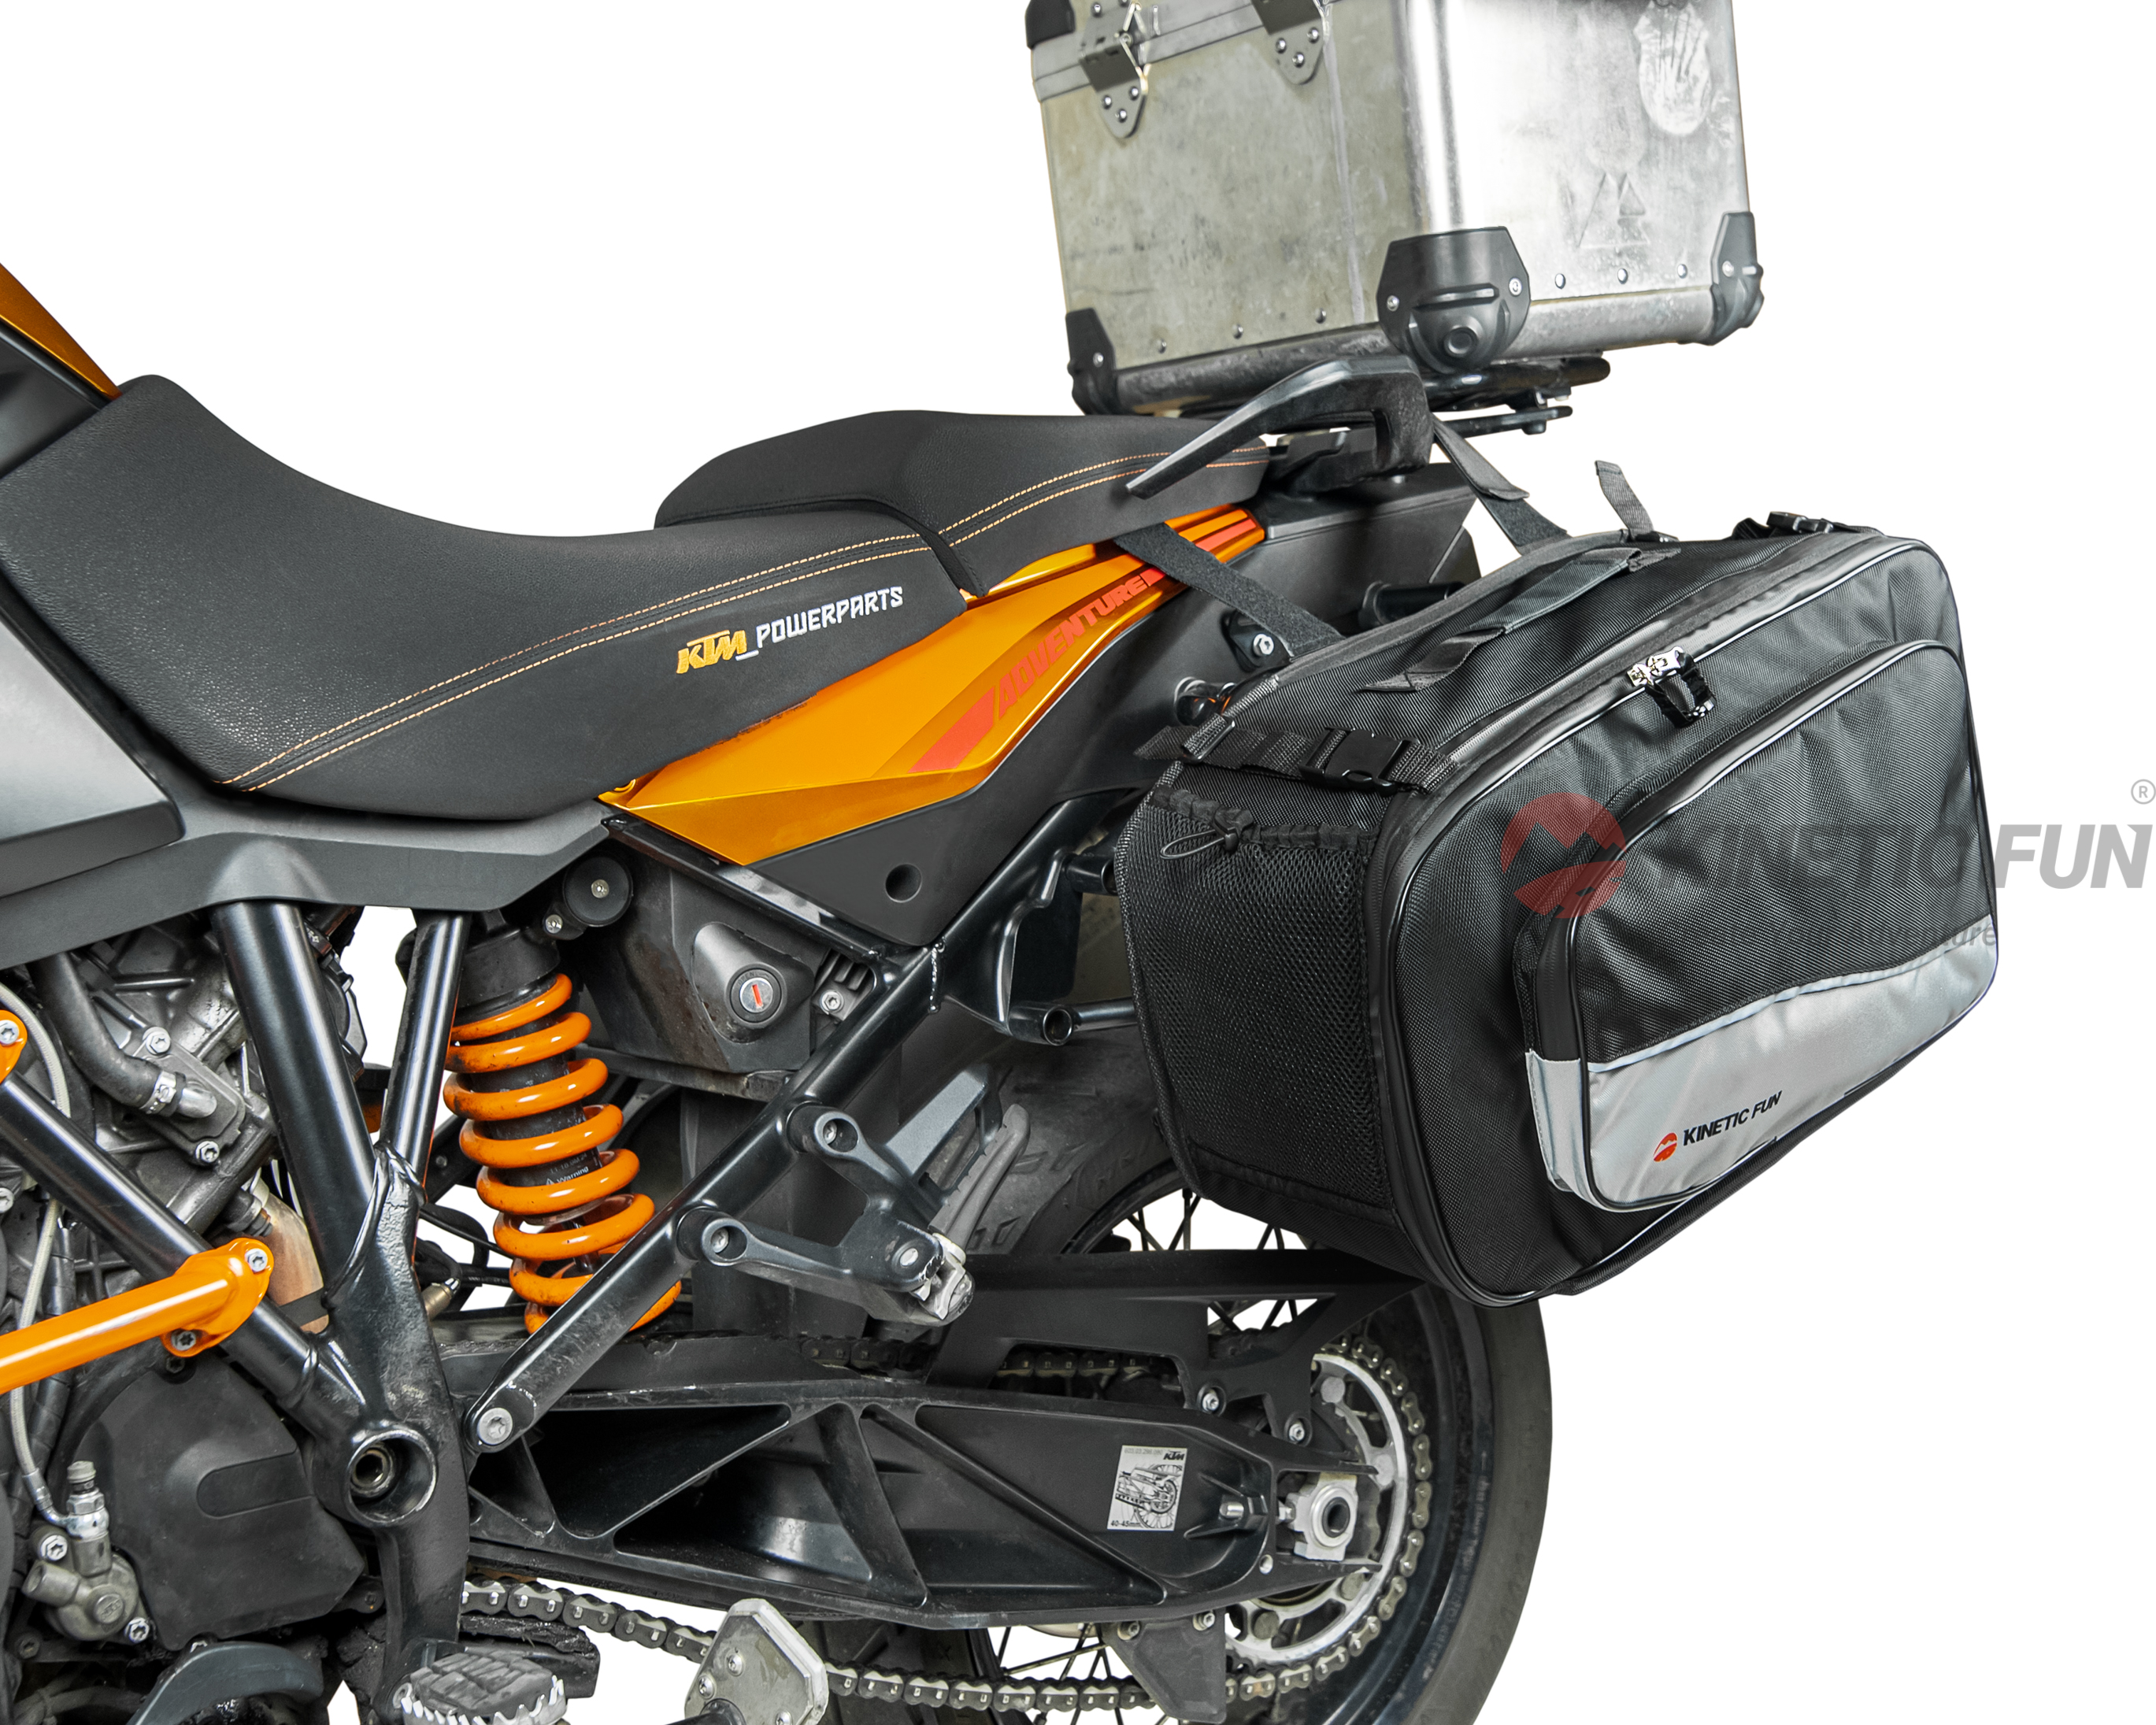 Сумки для мотоцикла Triumph TIGER 955I - боковые XL Evo (пара), объём 46-68 литров